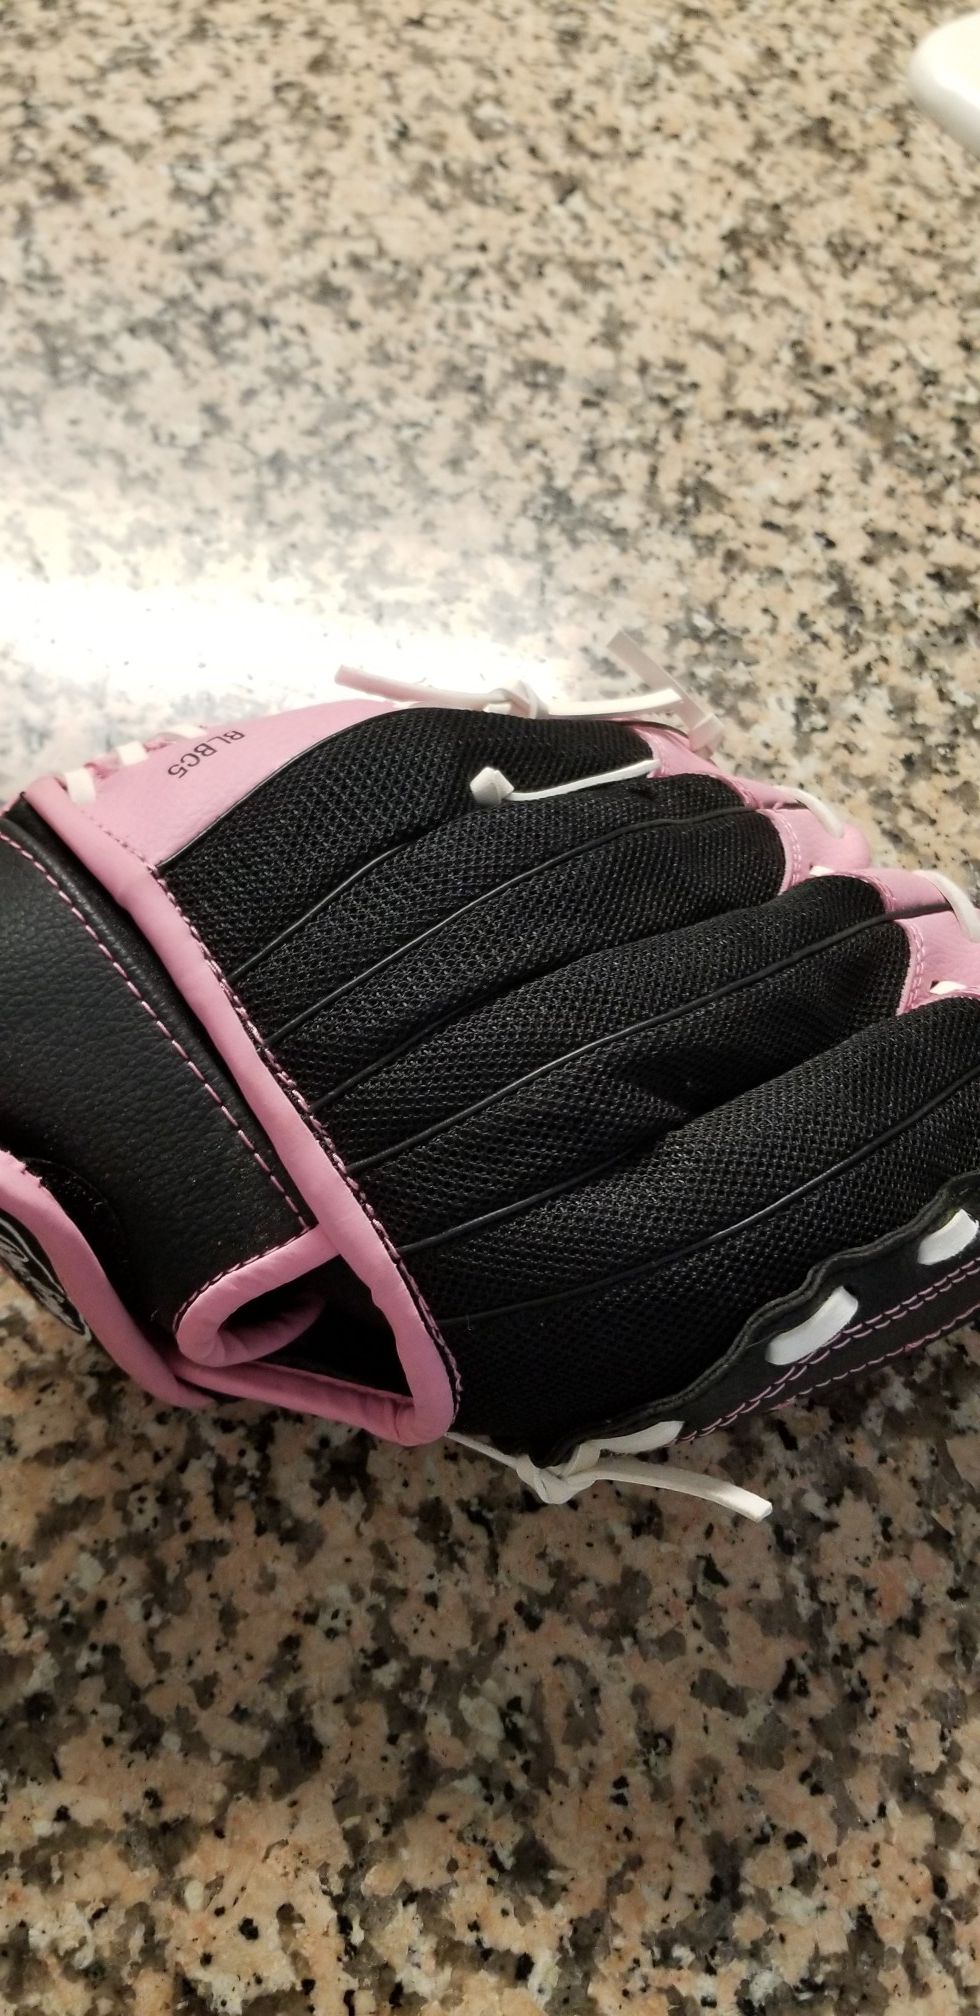 Softball glove used once